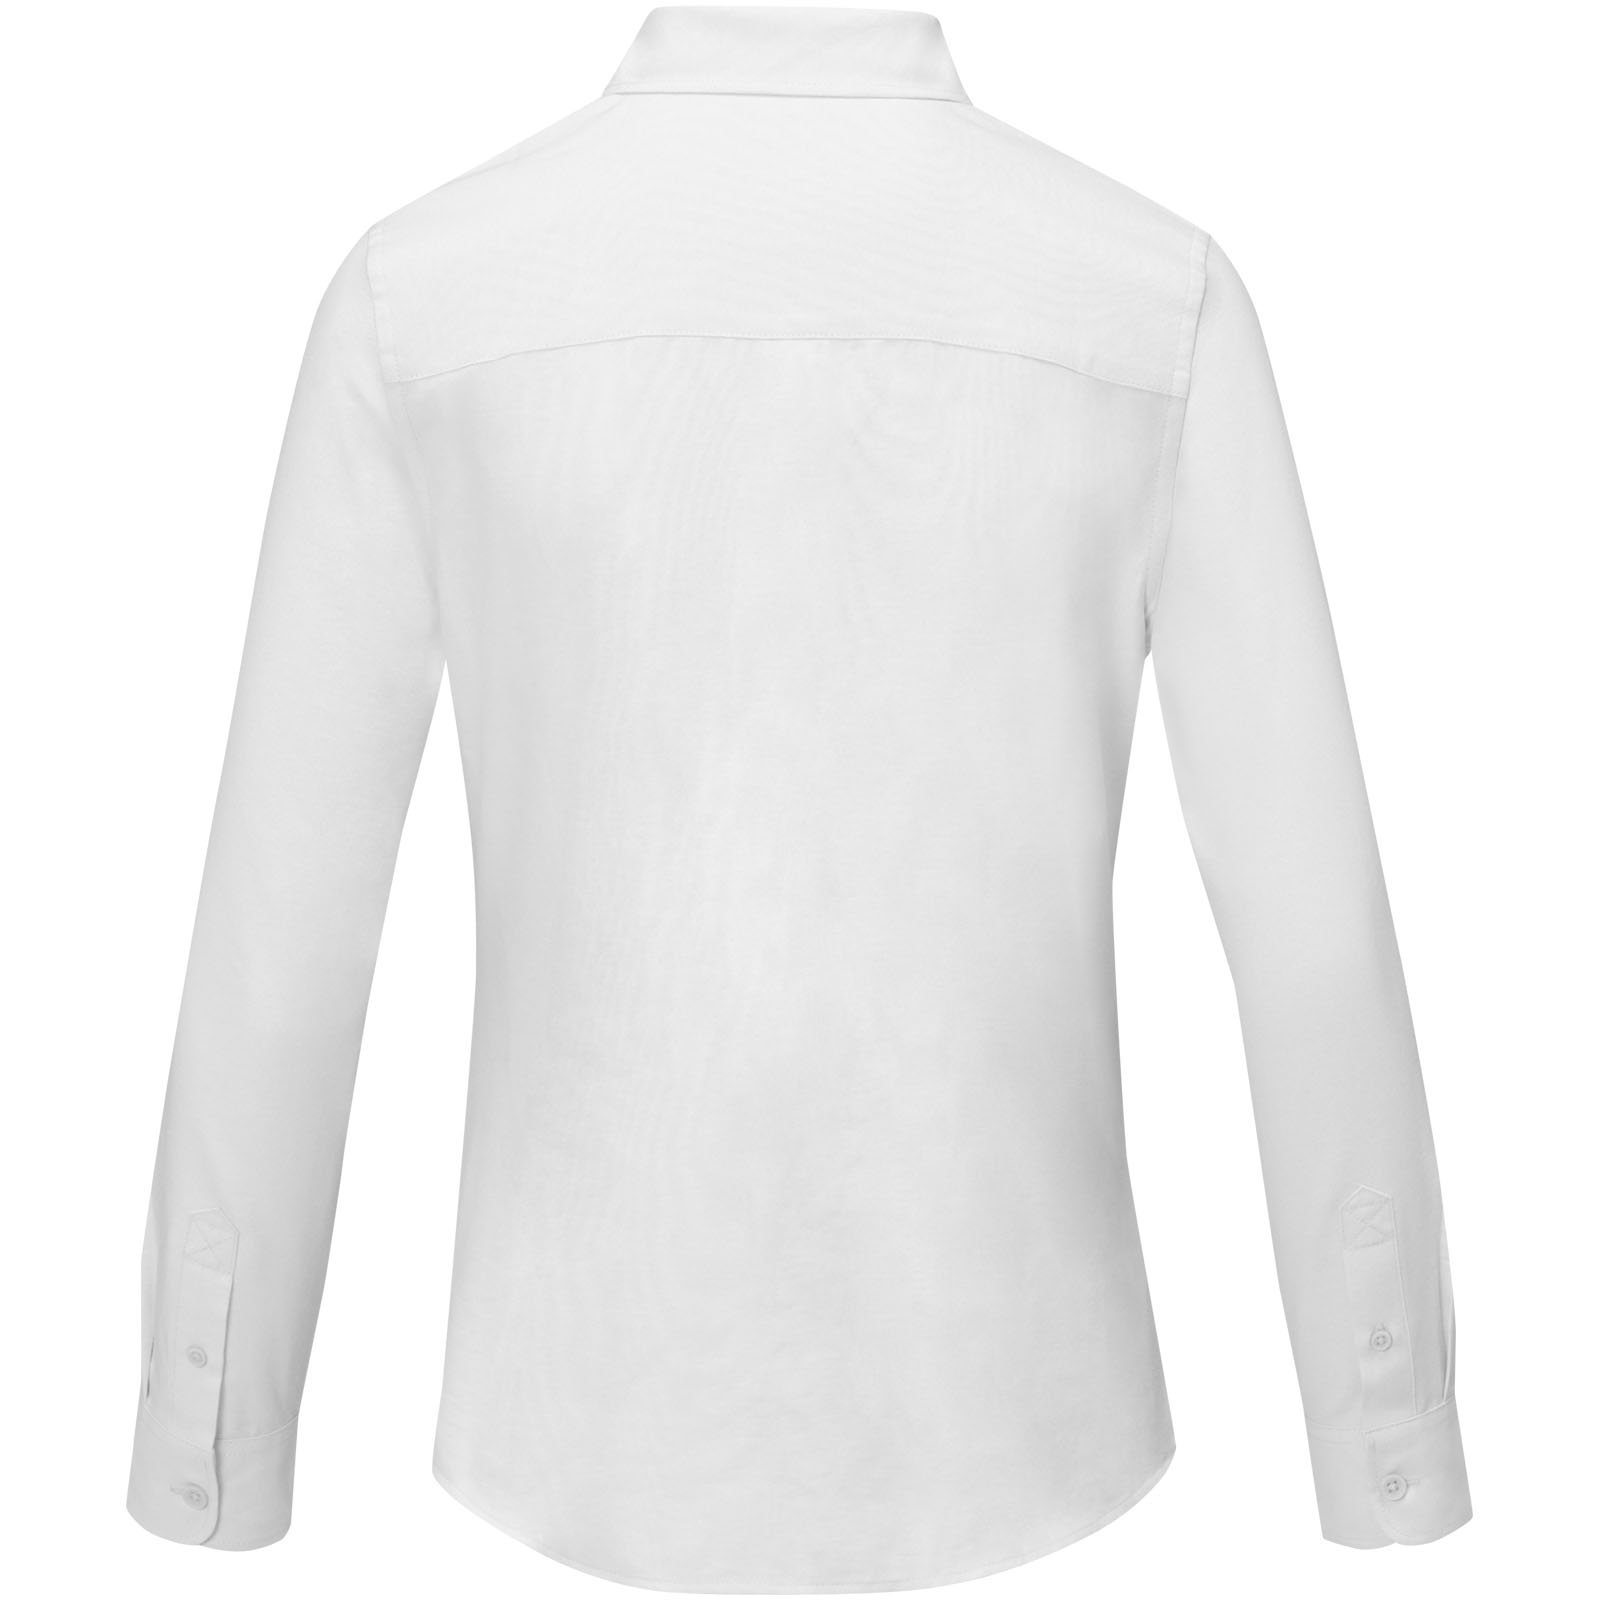 Advertising Shirts - Pollux long sleeve women's shirt - 2